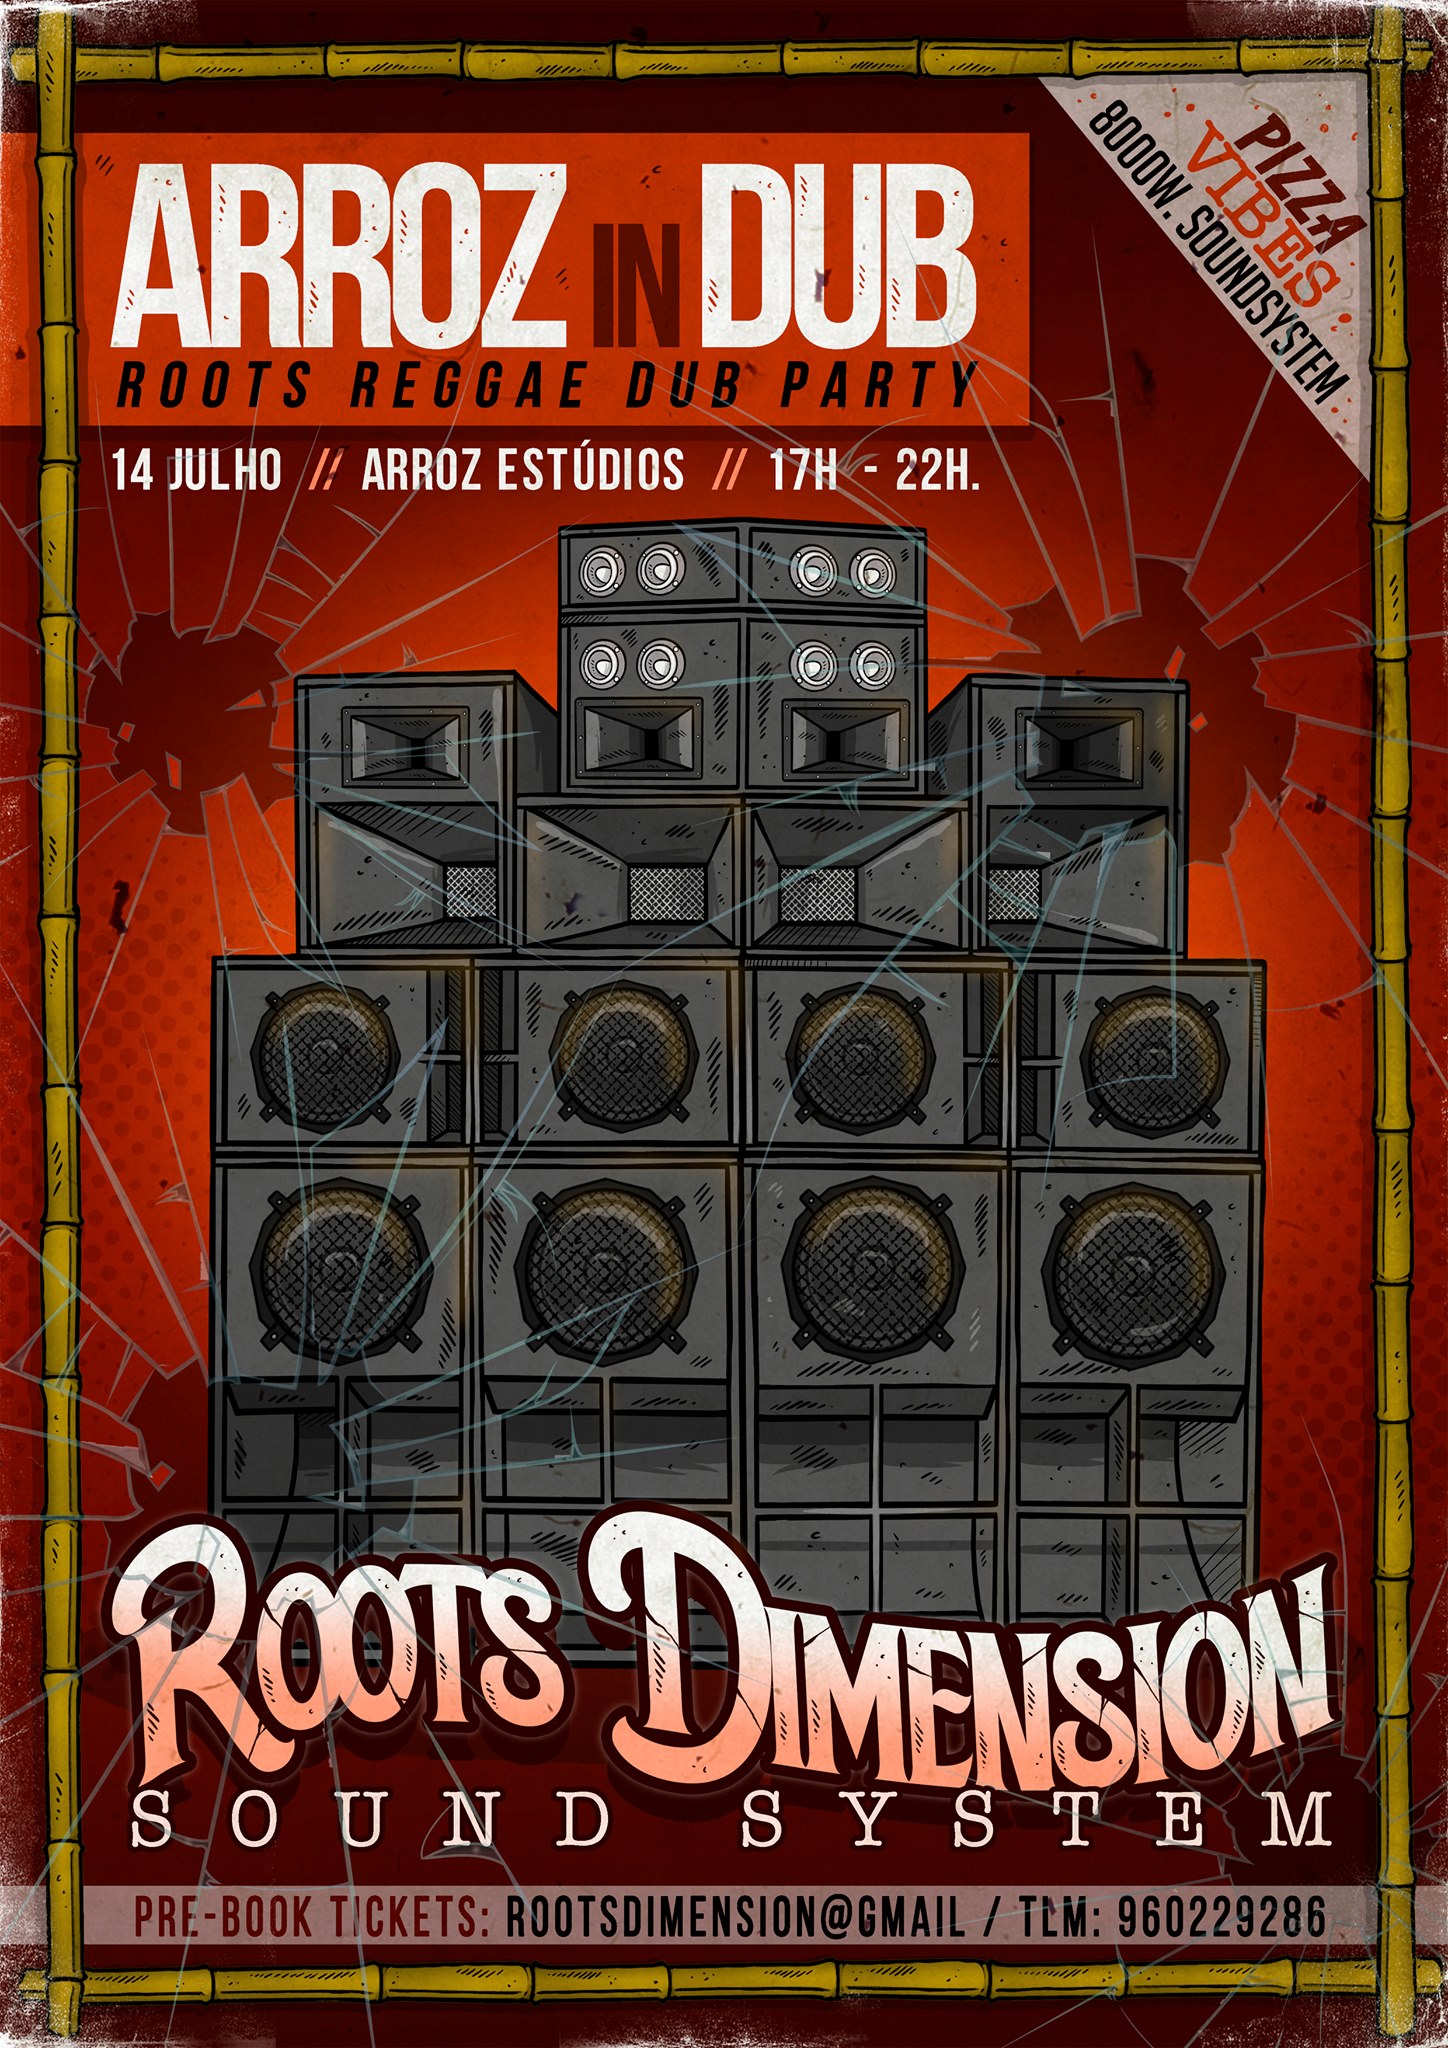 Arroz in Dub - Roots Dimension Soundsystem